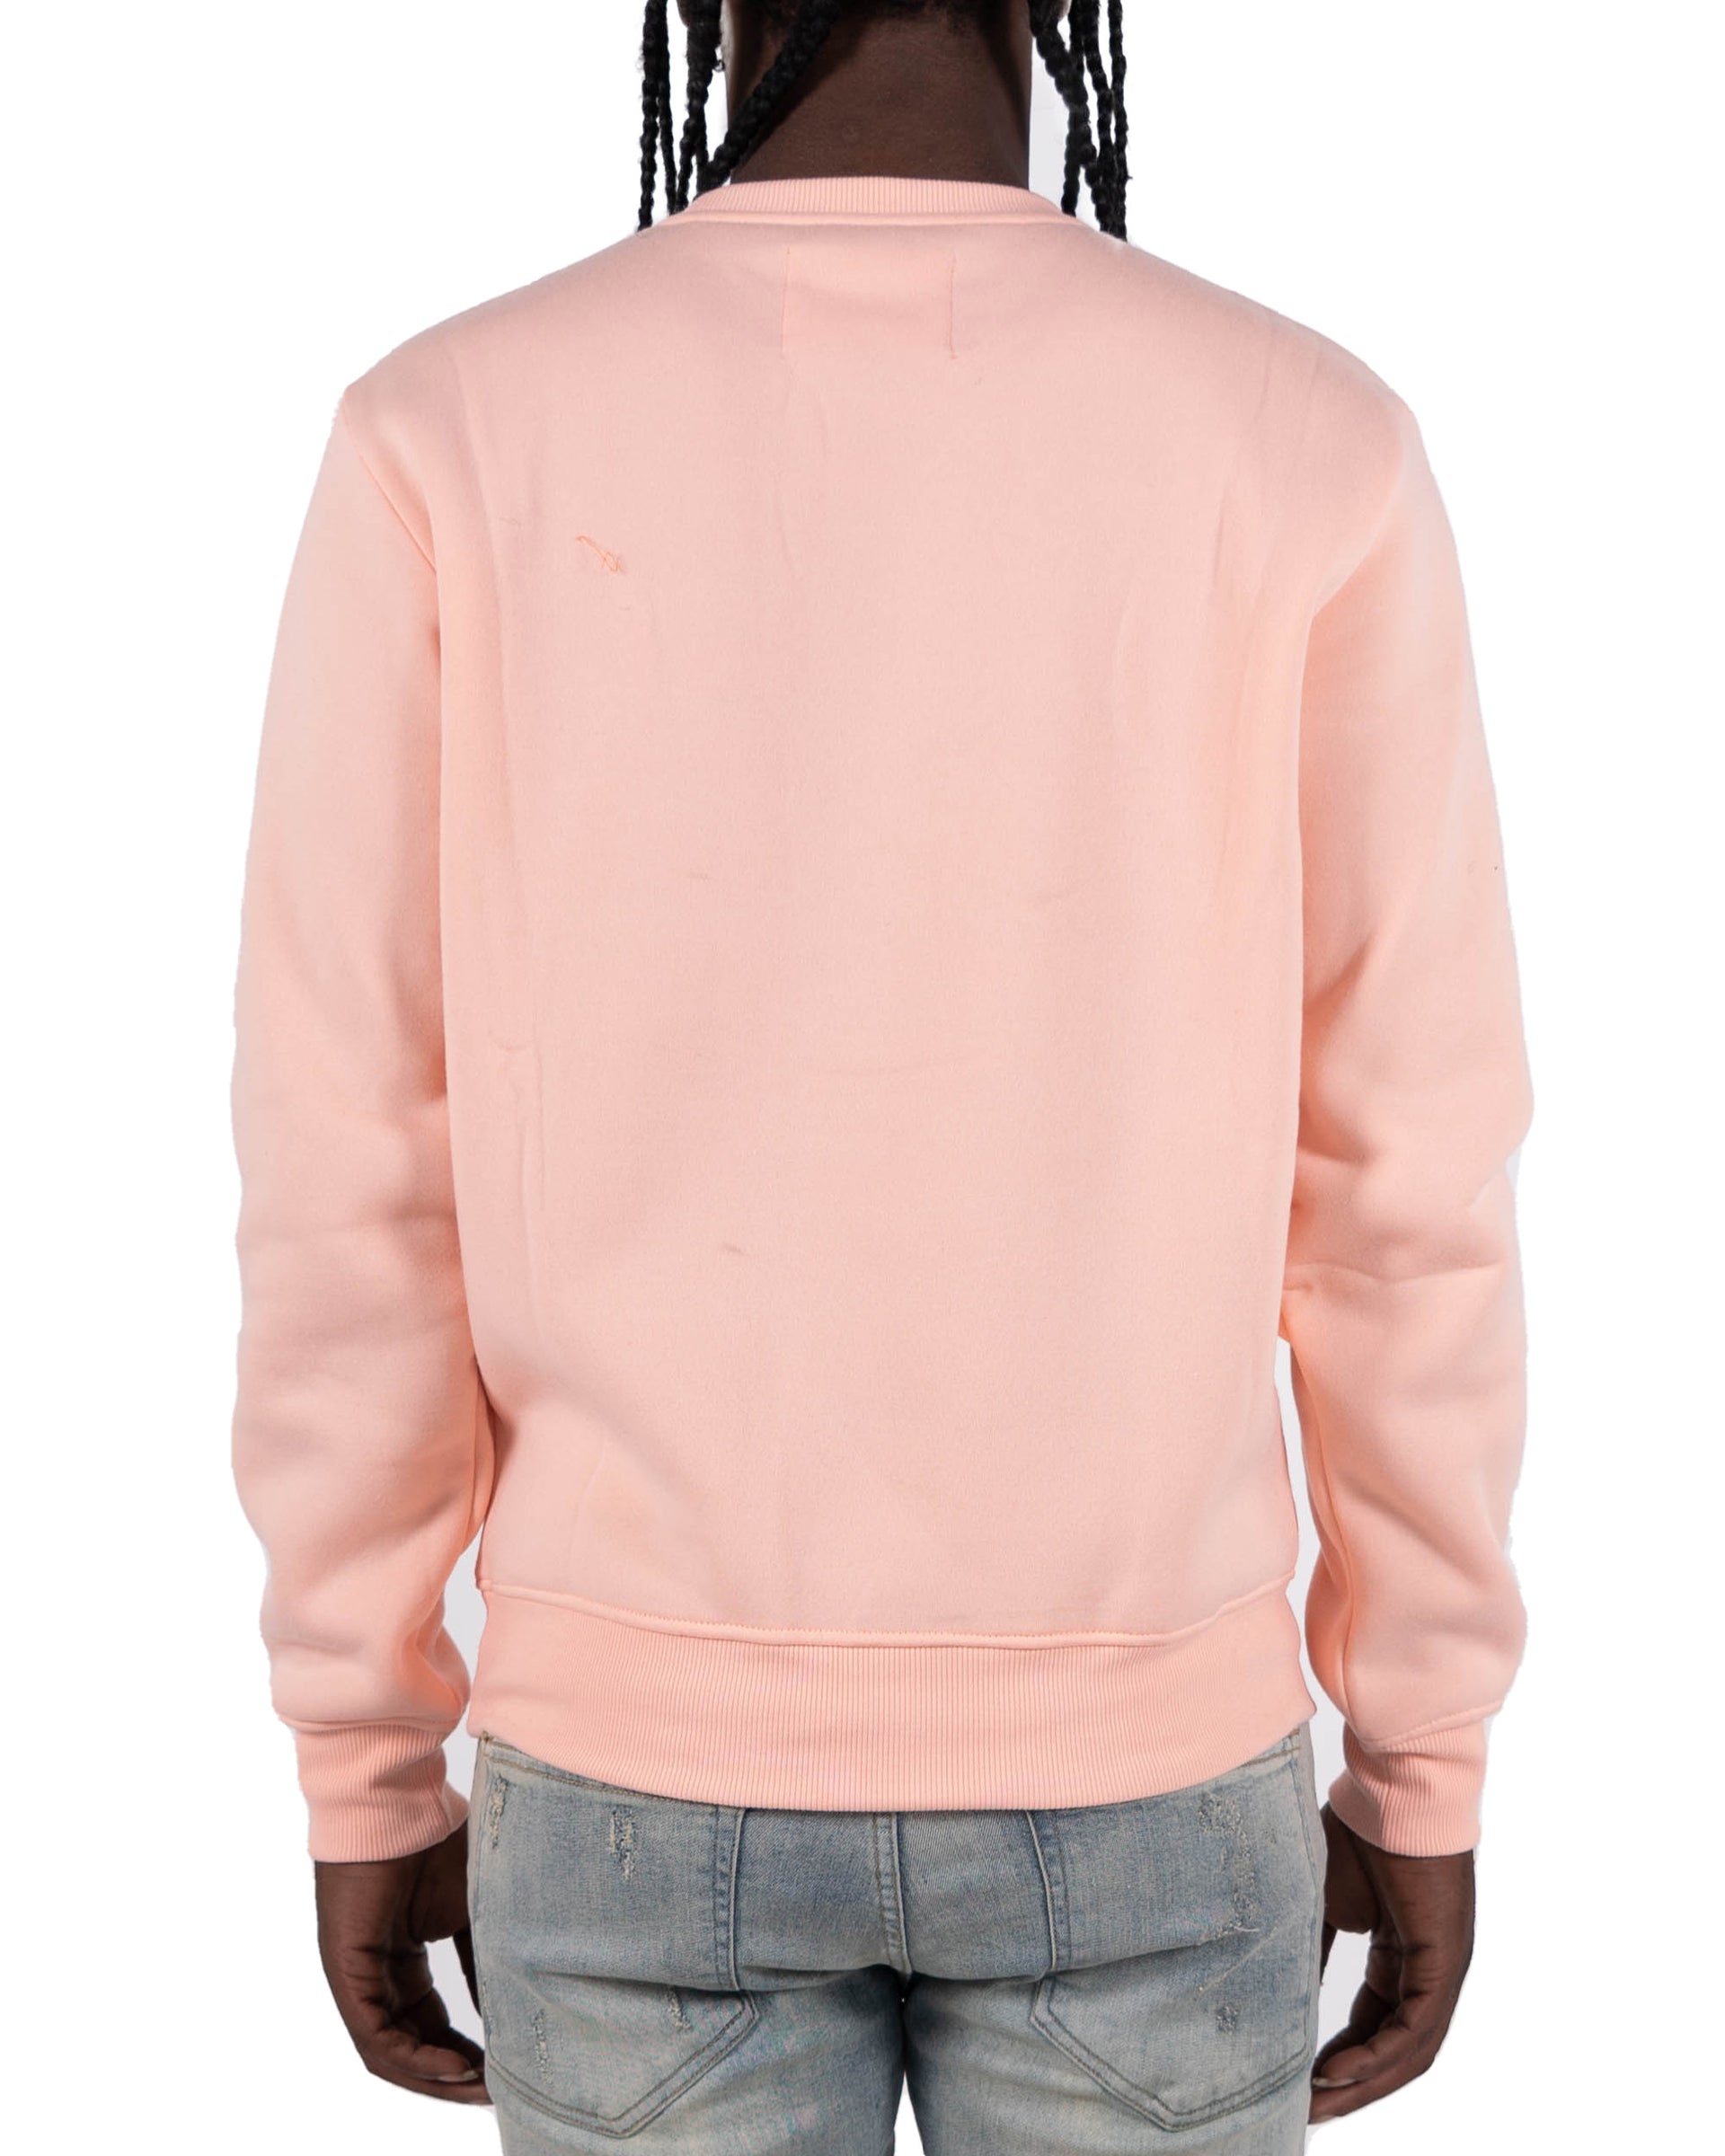 Men's "Good Guy" Graphic Embroidered Sweatshirt | Light Pink